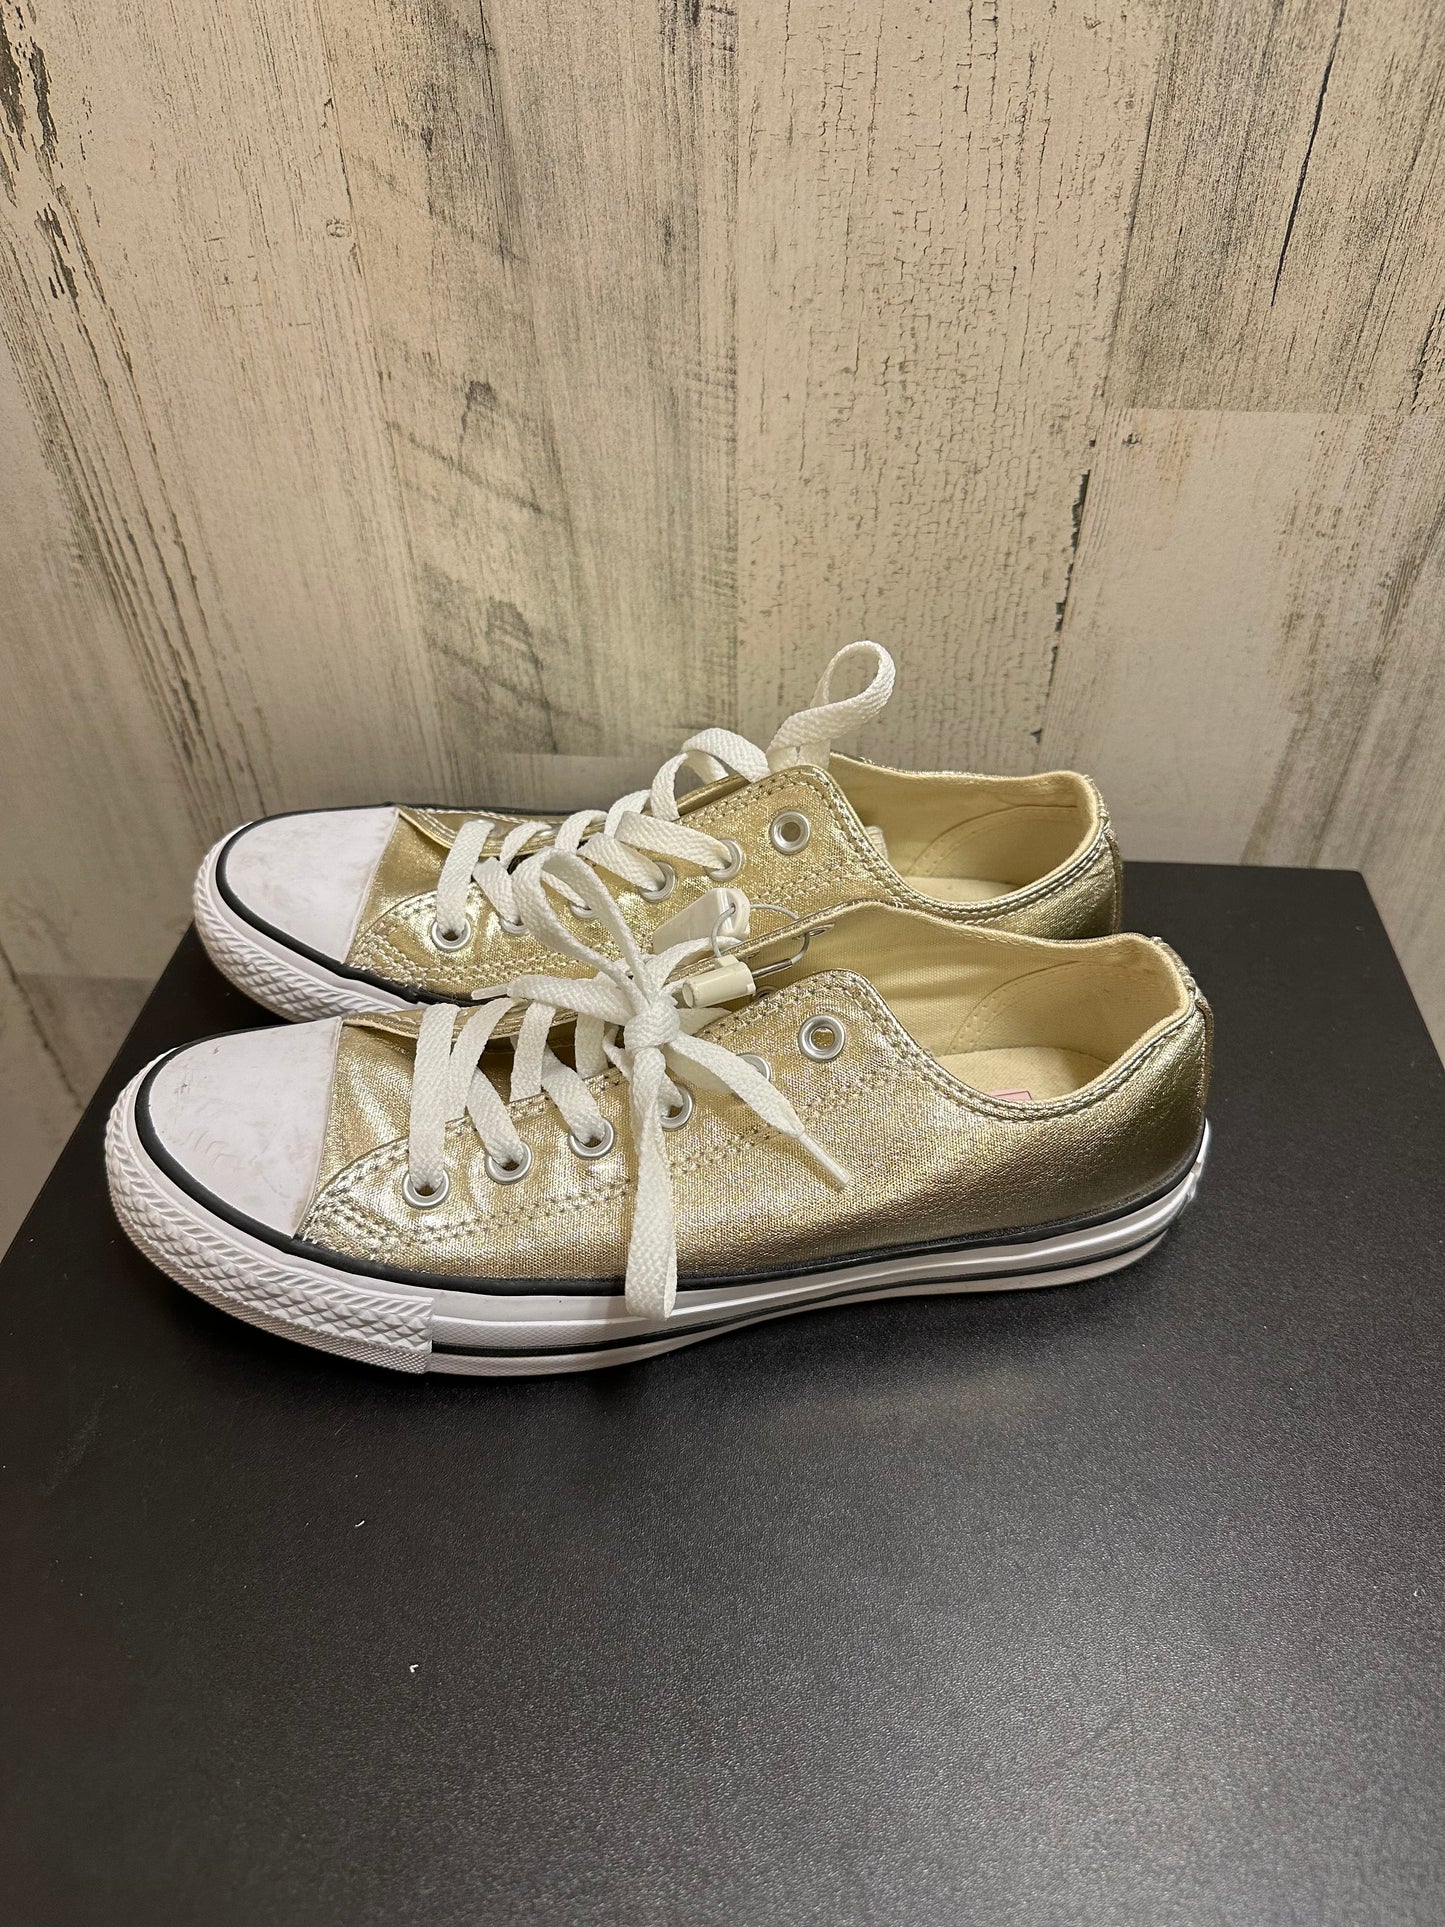 Gold Shoes Flats Converse, Size 8